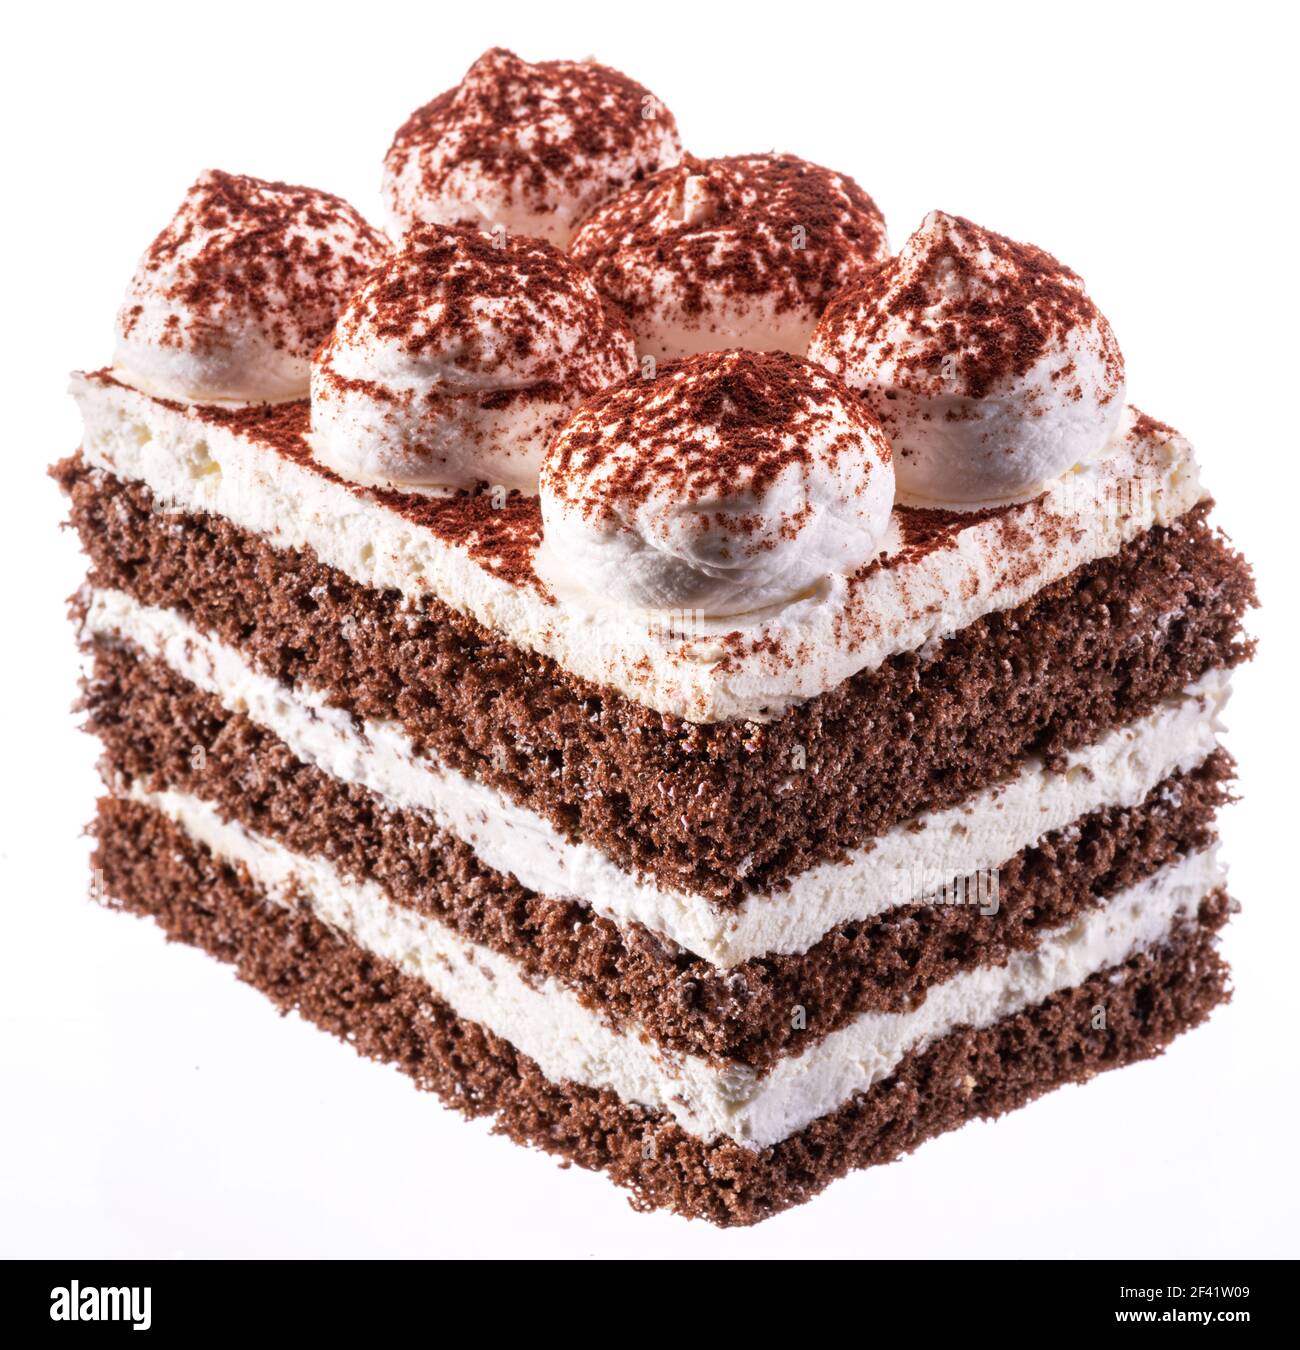 Slice of chocolate cake with tiramisu cream and cocoa powder isolated on white background. Stock Photo